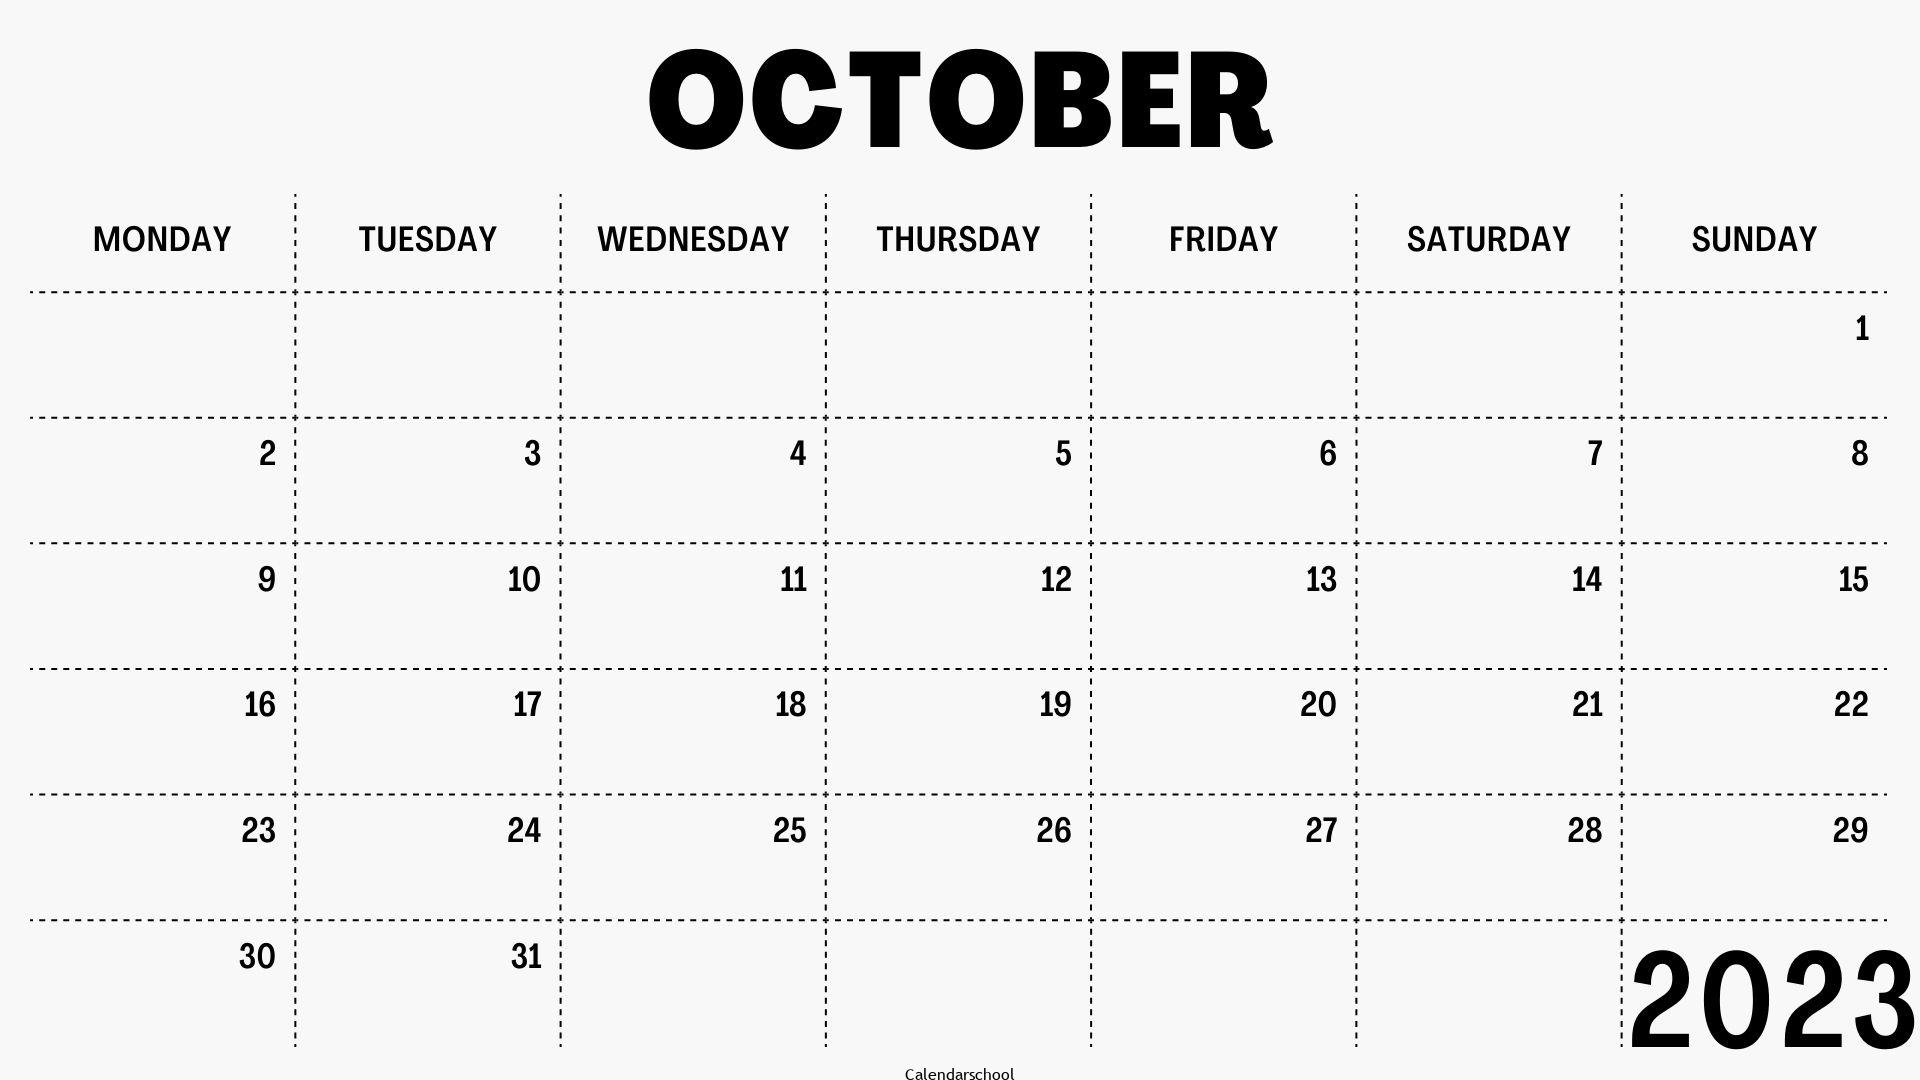 Calendar October 2023